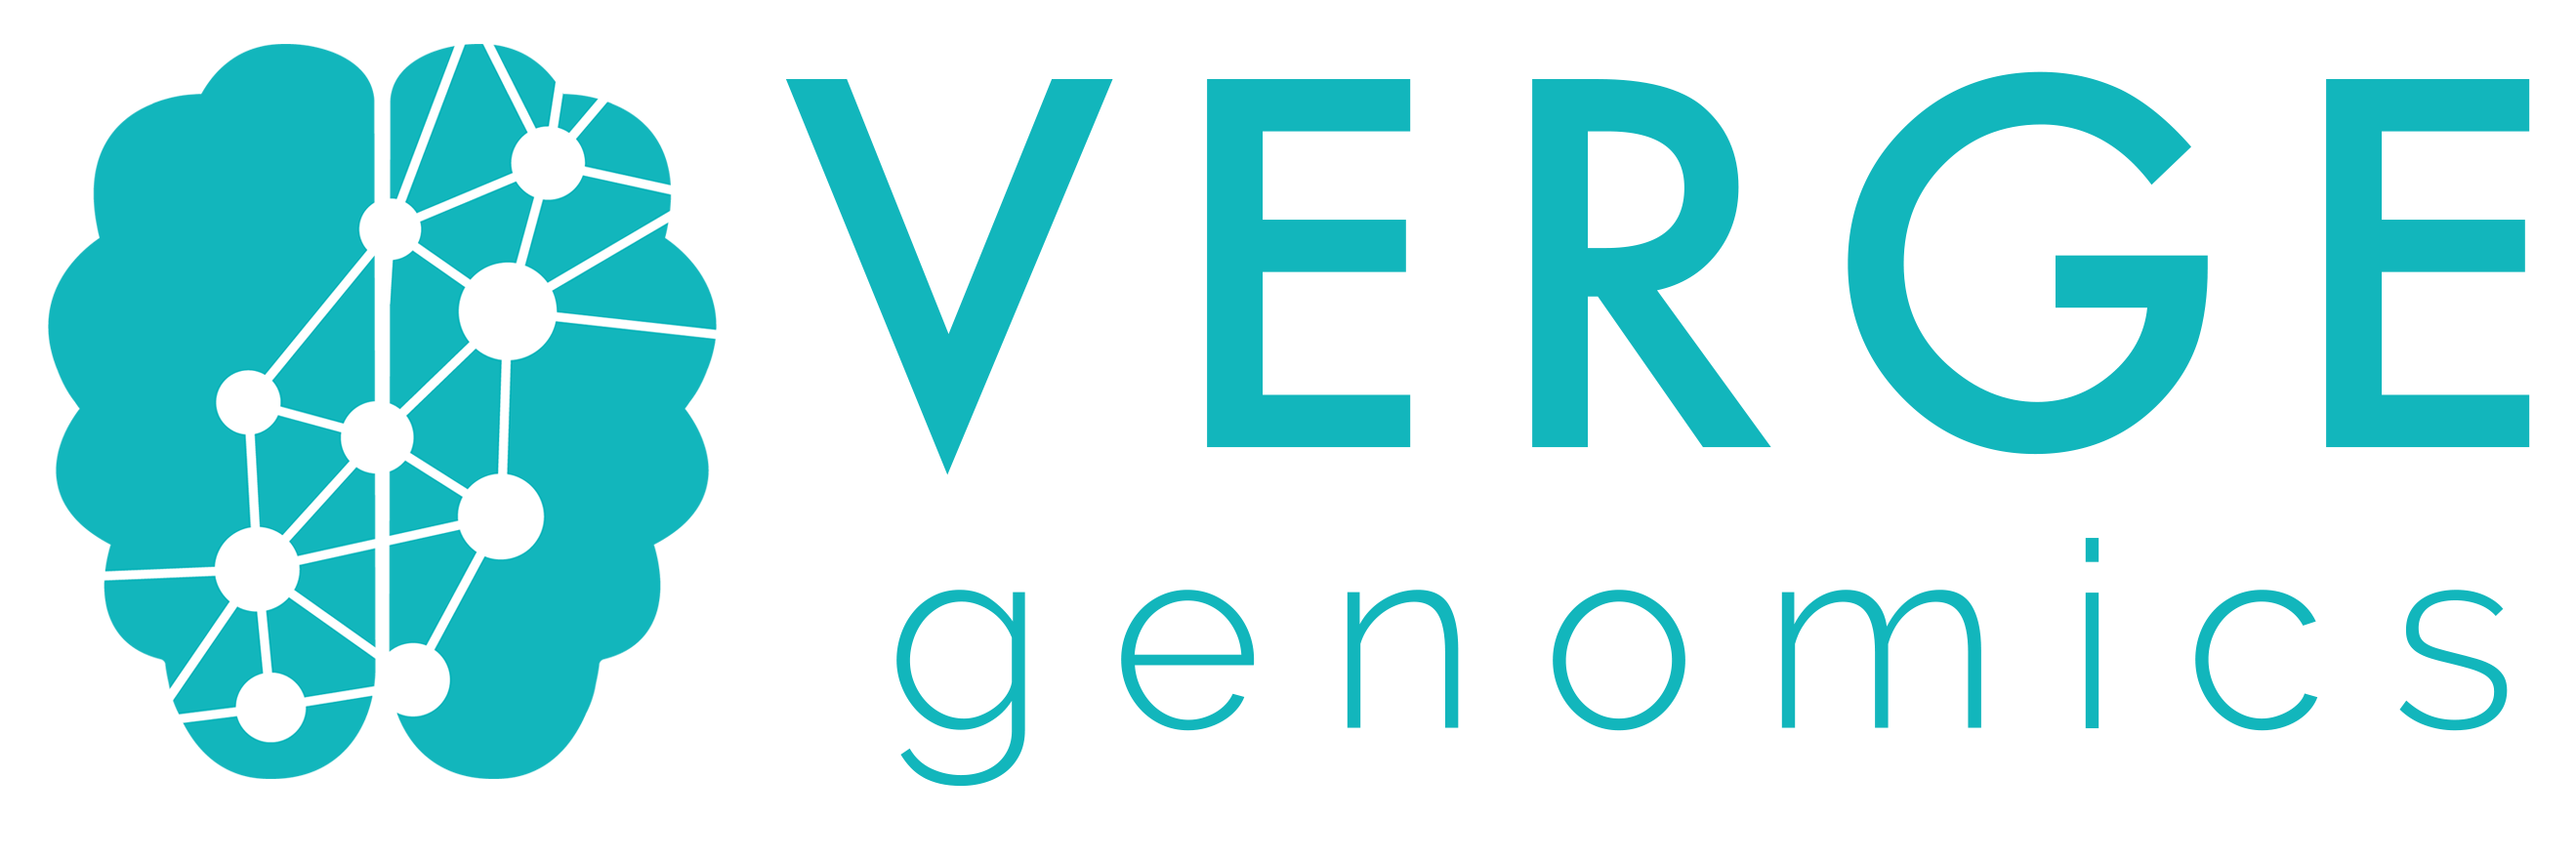 Verge Logo.png